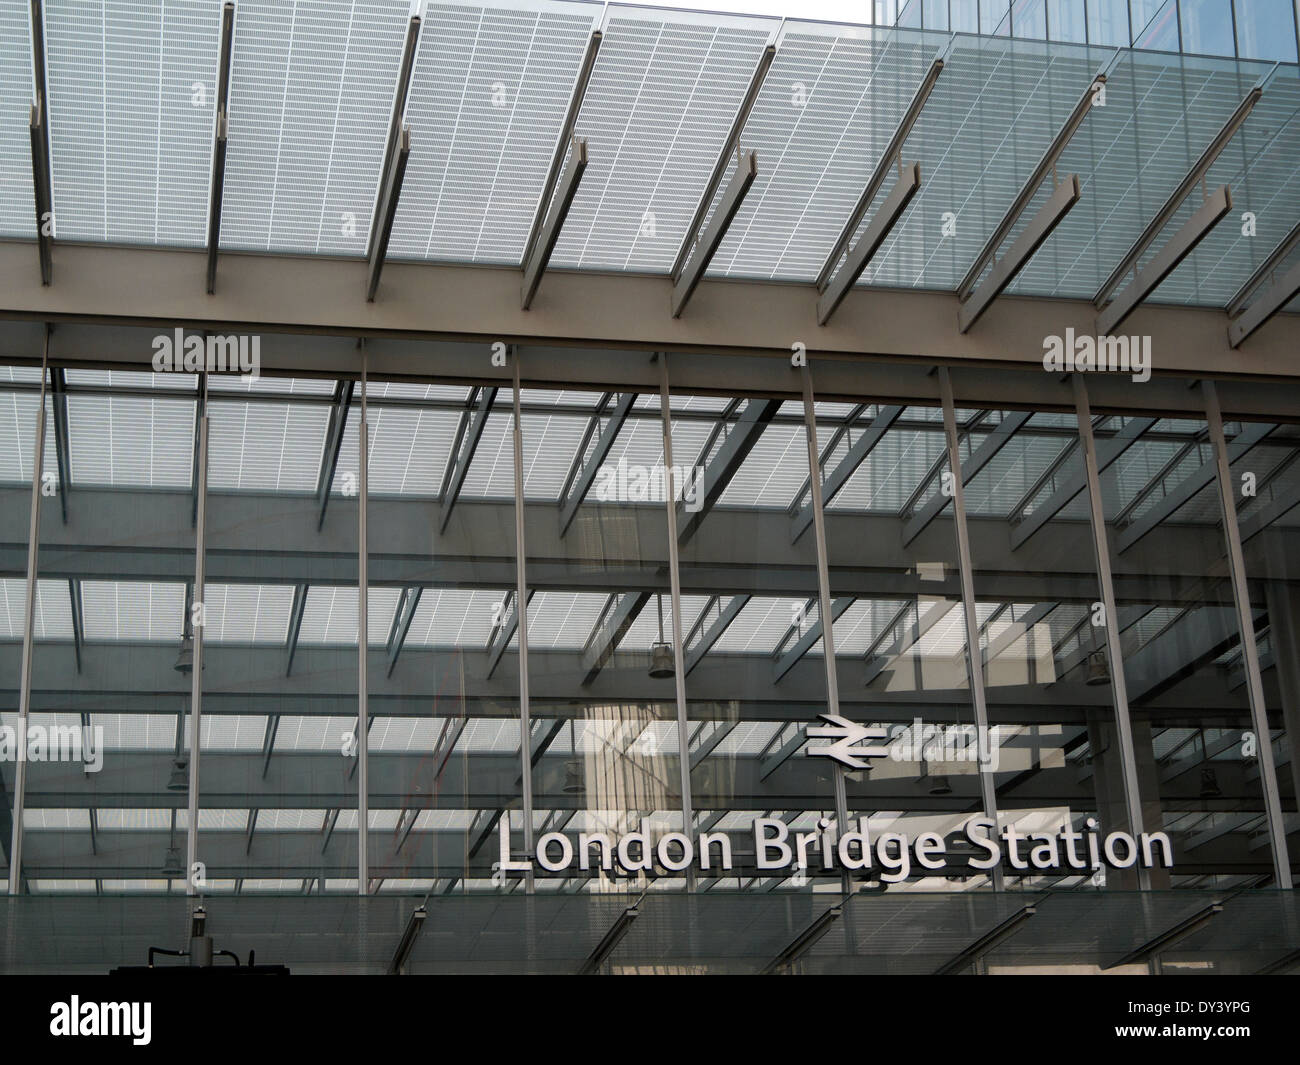 London Bridge Station sign at the STATION entrance,  UK KATHY DEWITT Stock Photo